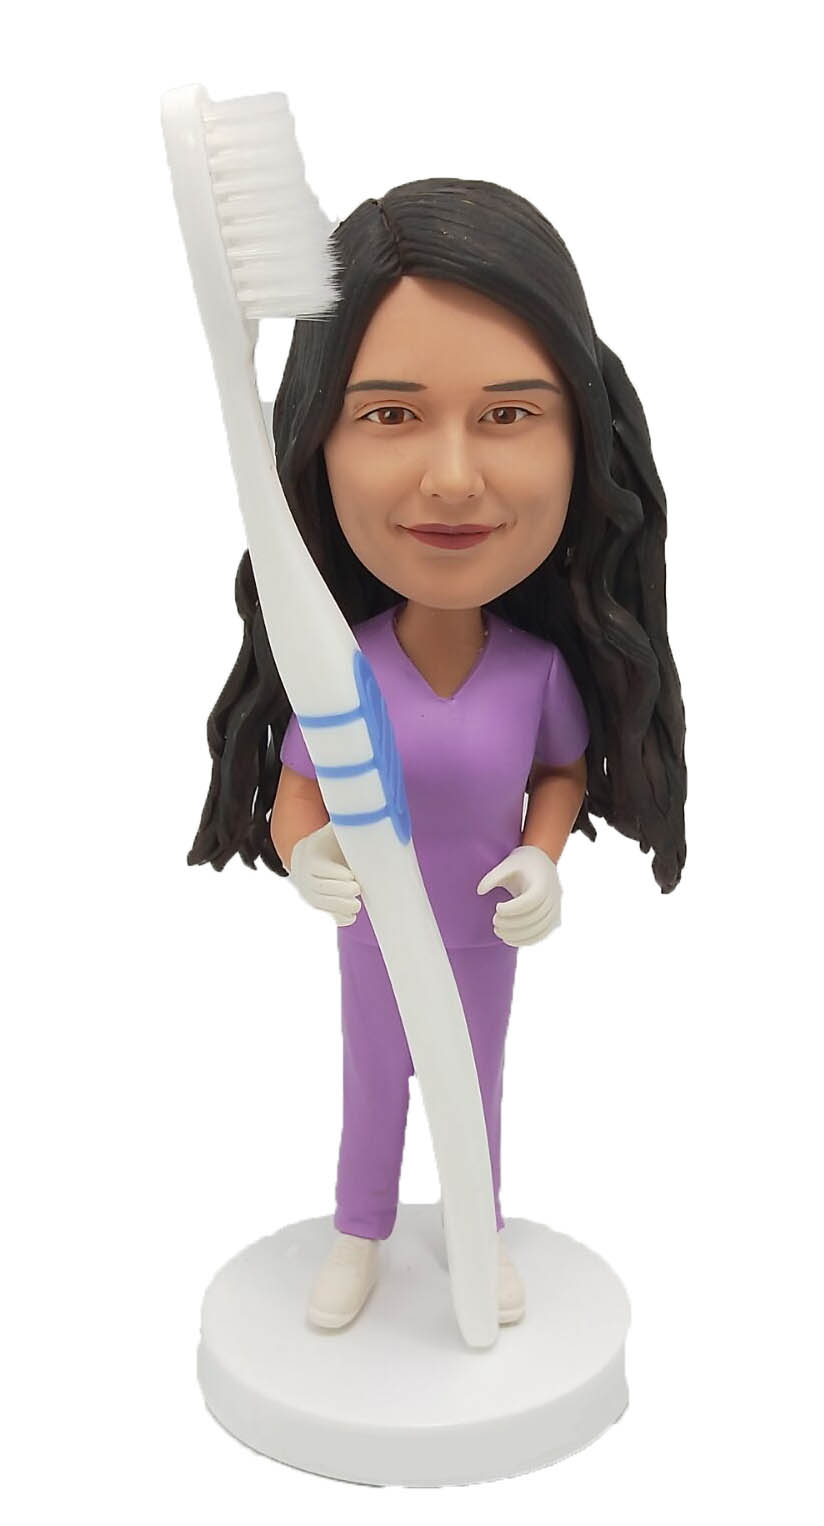 Personalized Bobblehead For Female Dentist Nurse